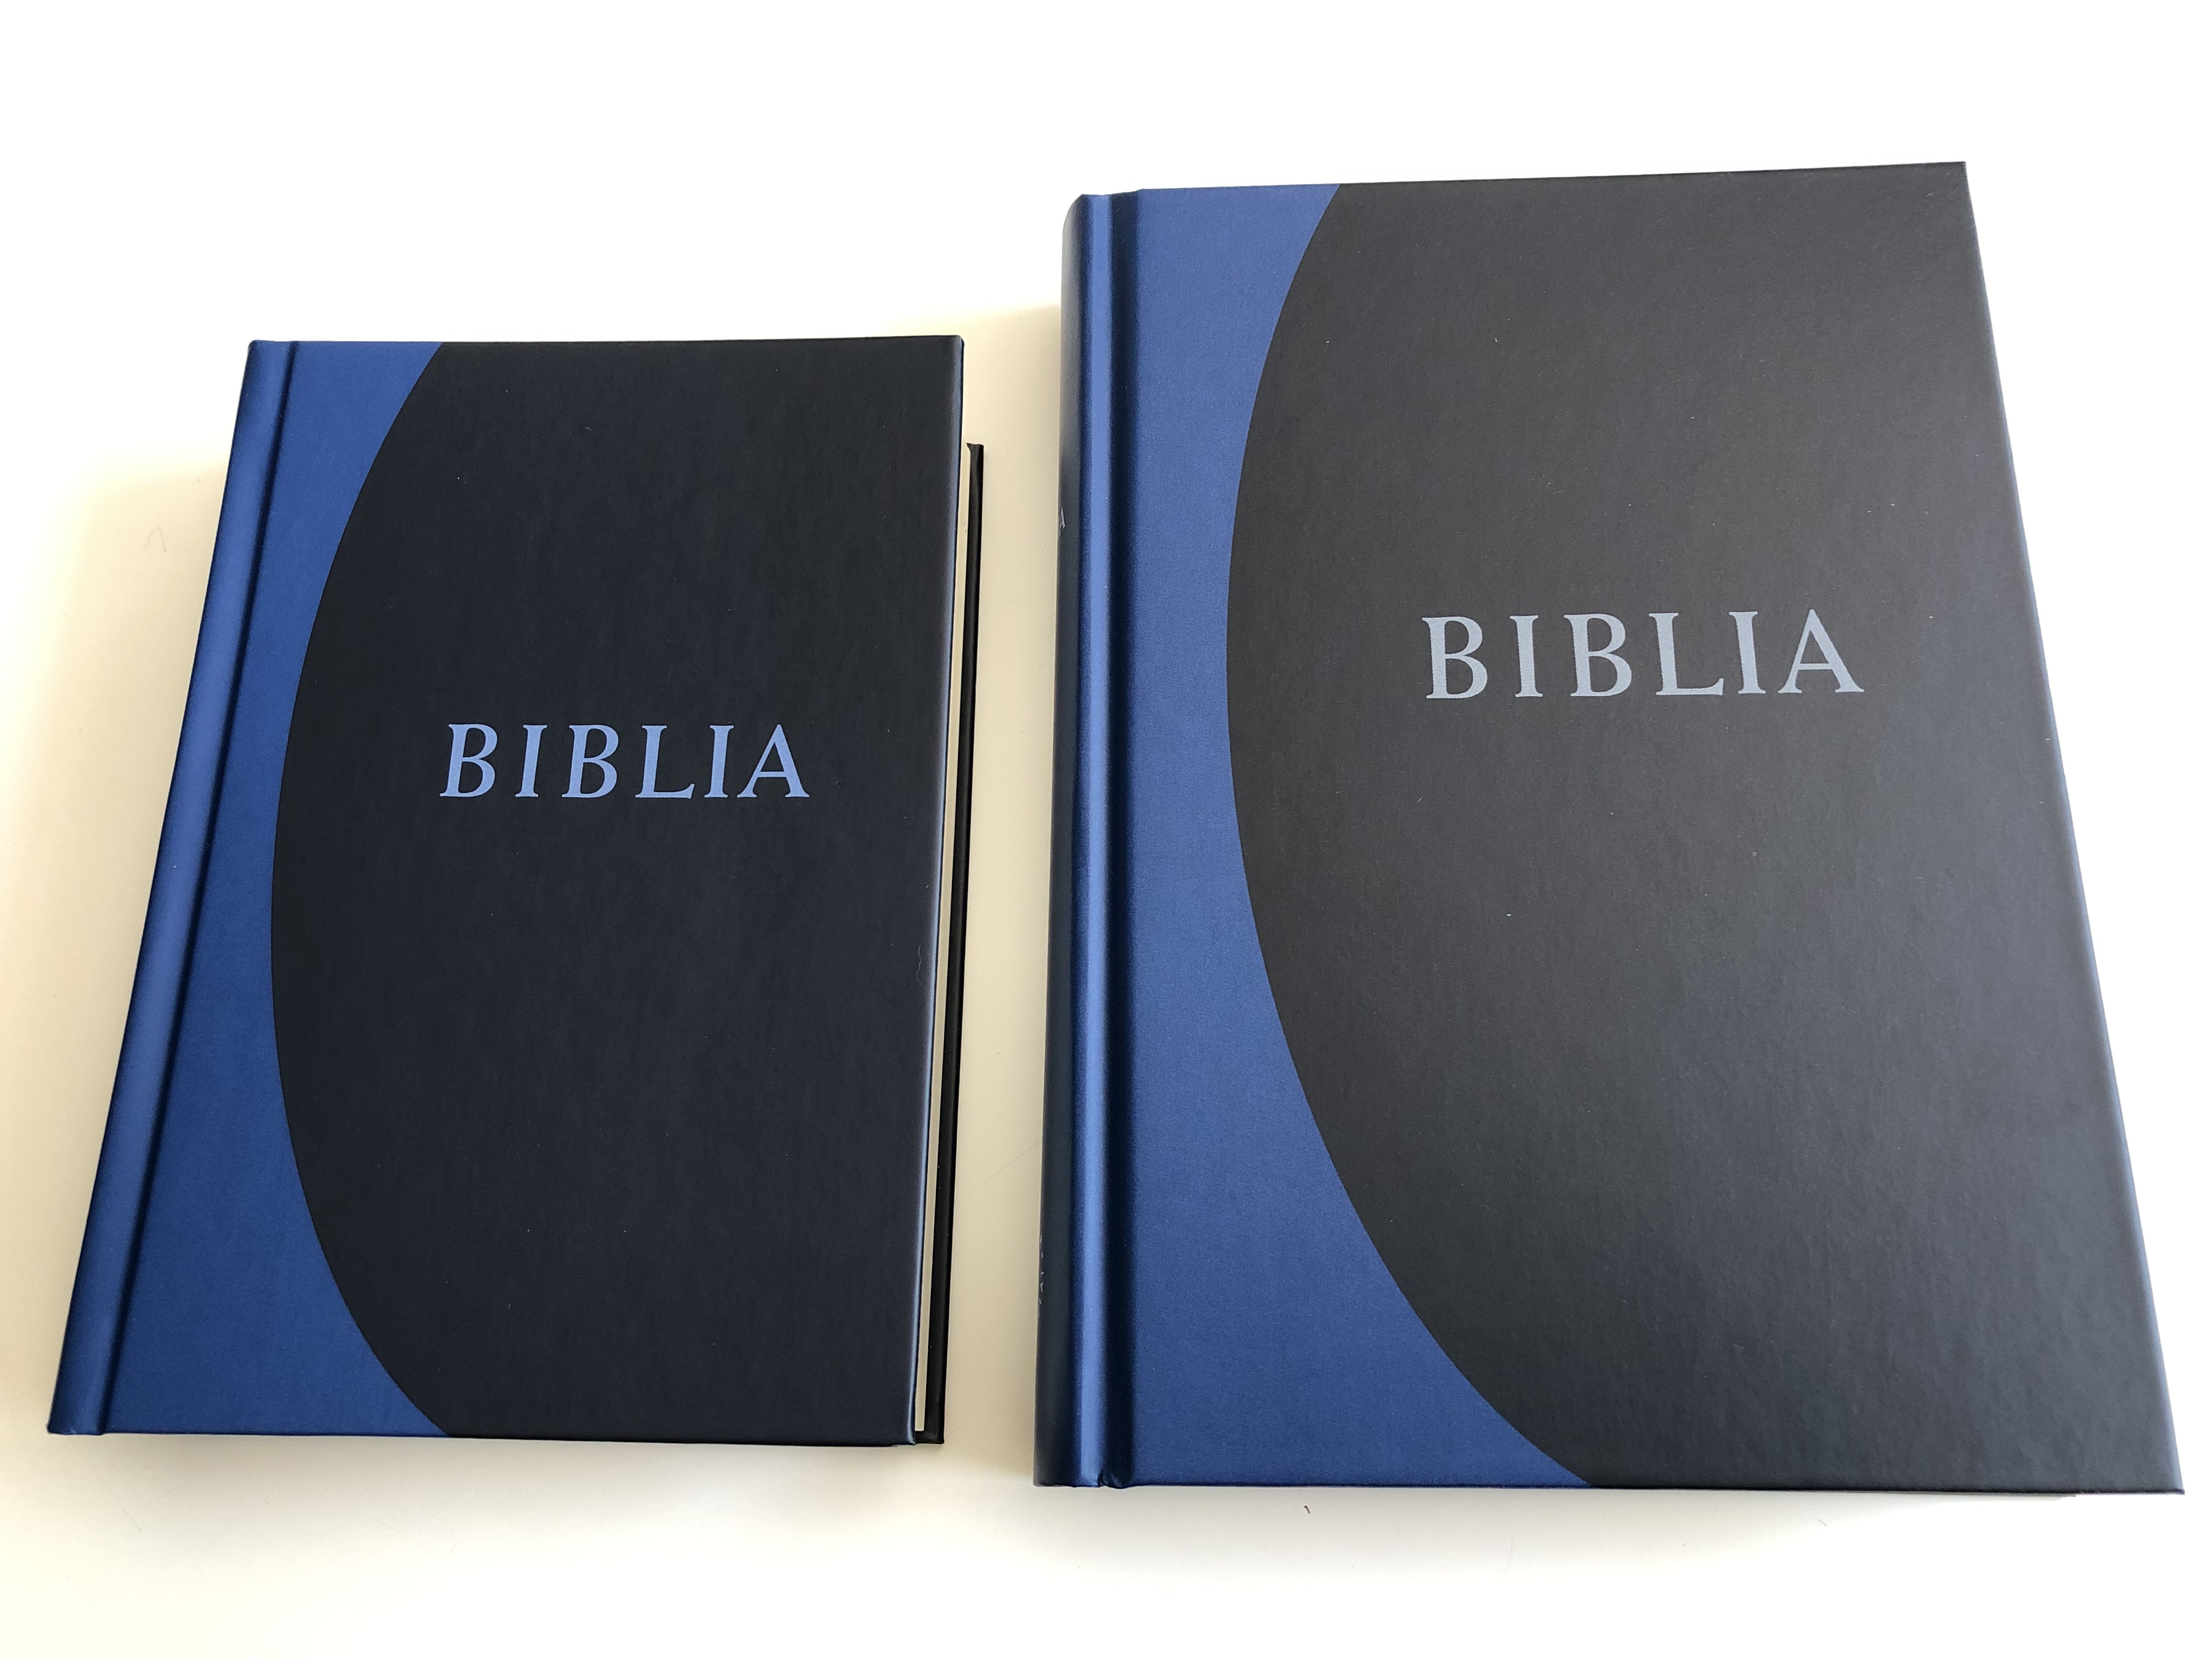 biblia-istennek-az-sz-vets-gben-s-jsz-vets-gben-adott-kijelent-se-r-f-2014-comparison.jpg